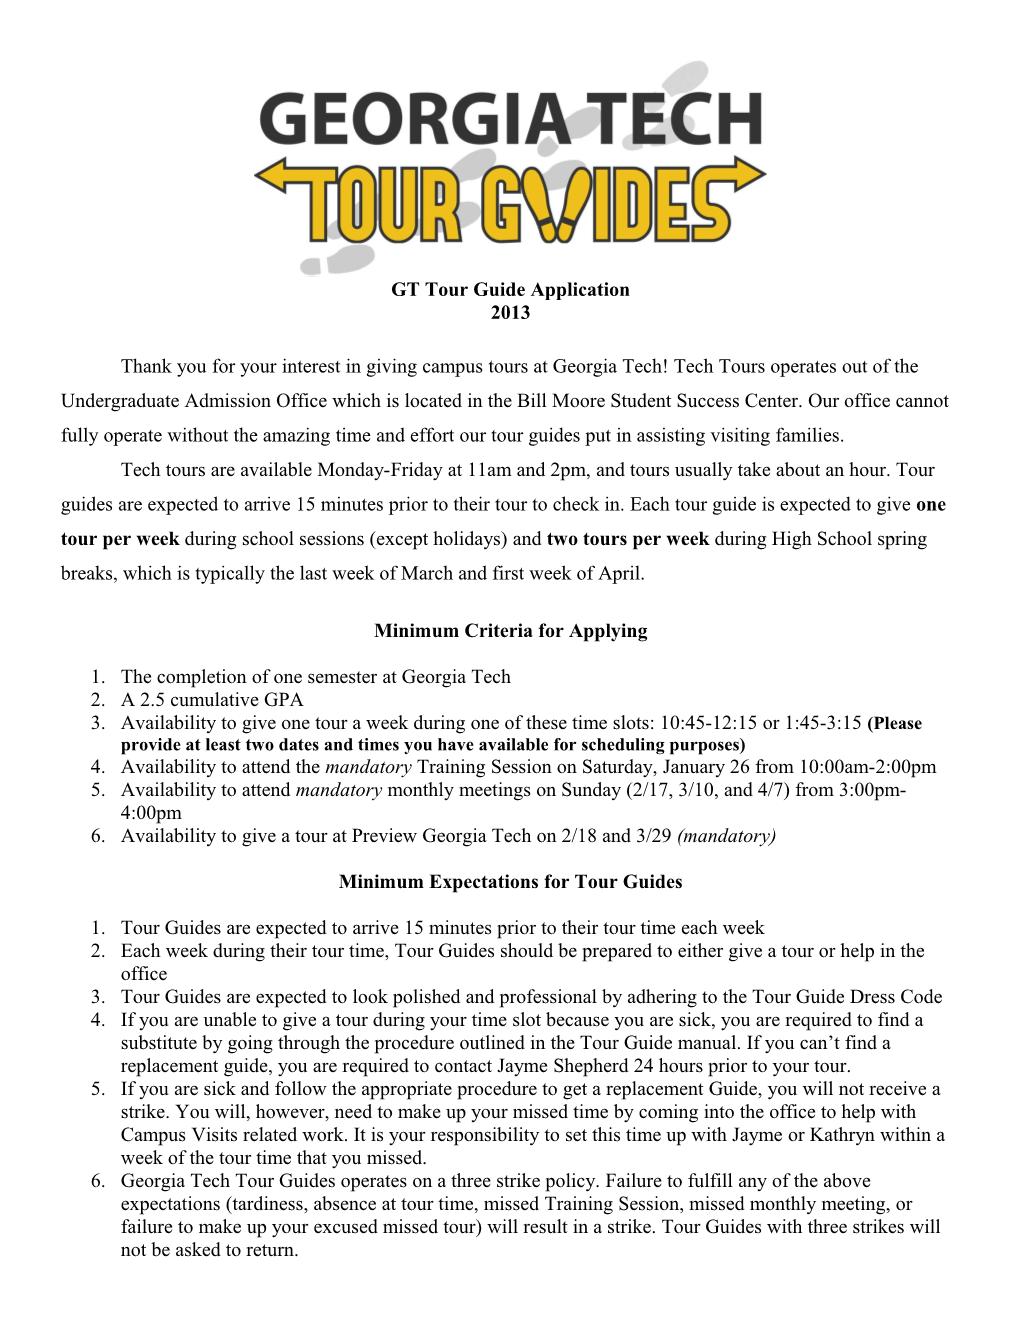 Summer And Fall 2003 Georgia Tech Tour Guide Application